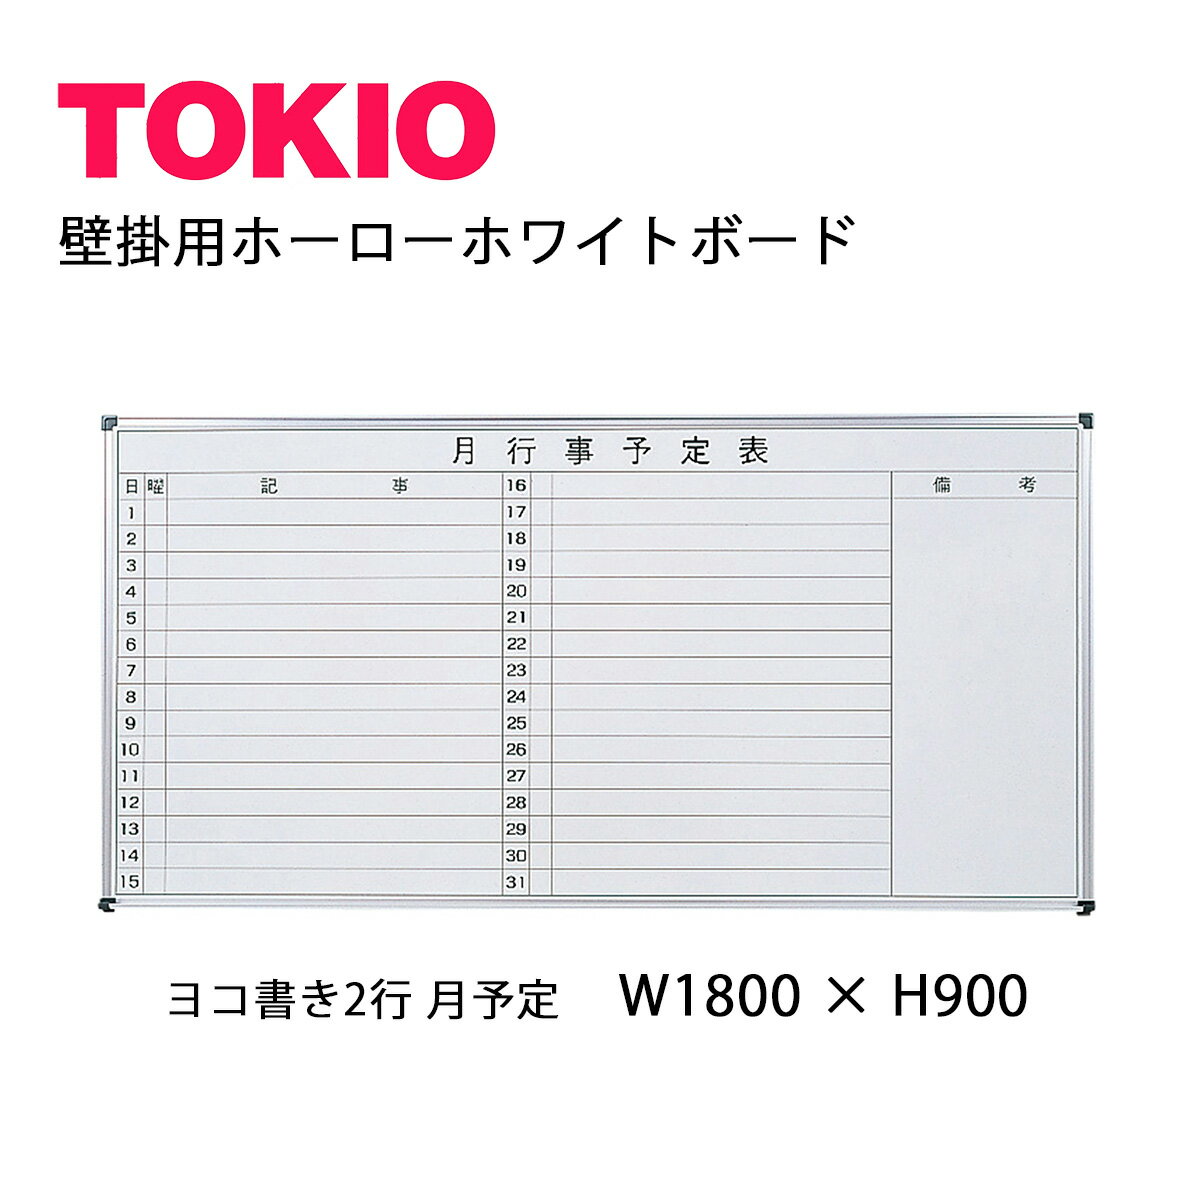 TOKIO【HMY918】壁掛用ホワイトボード